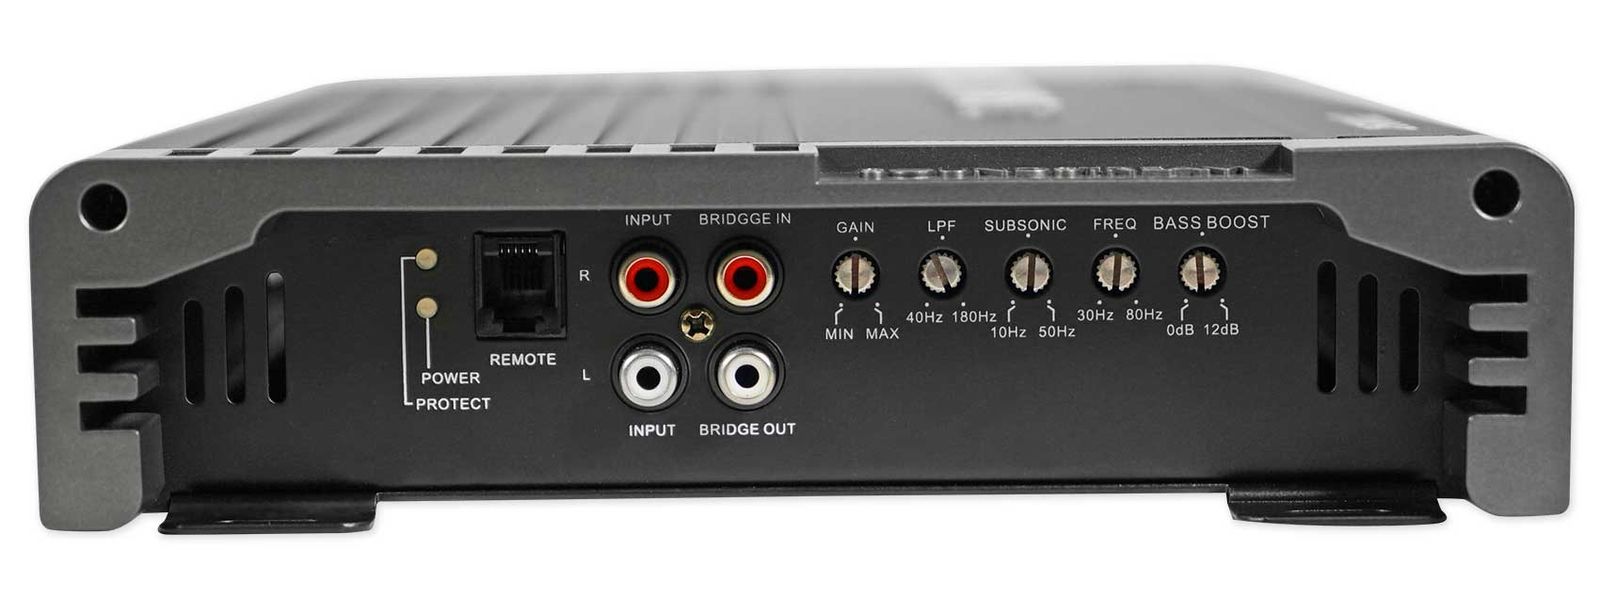 soundstream 7500 watt amp